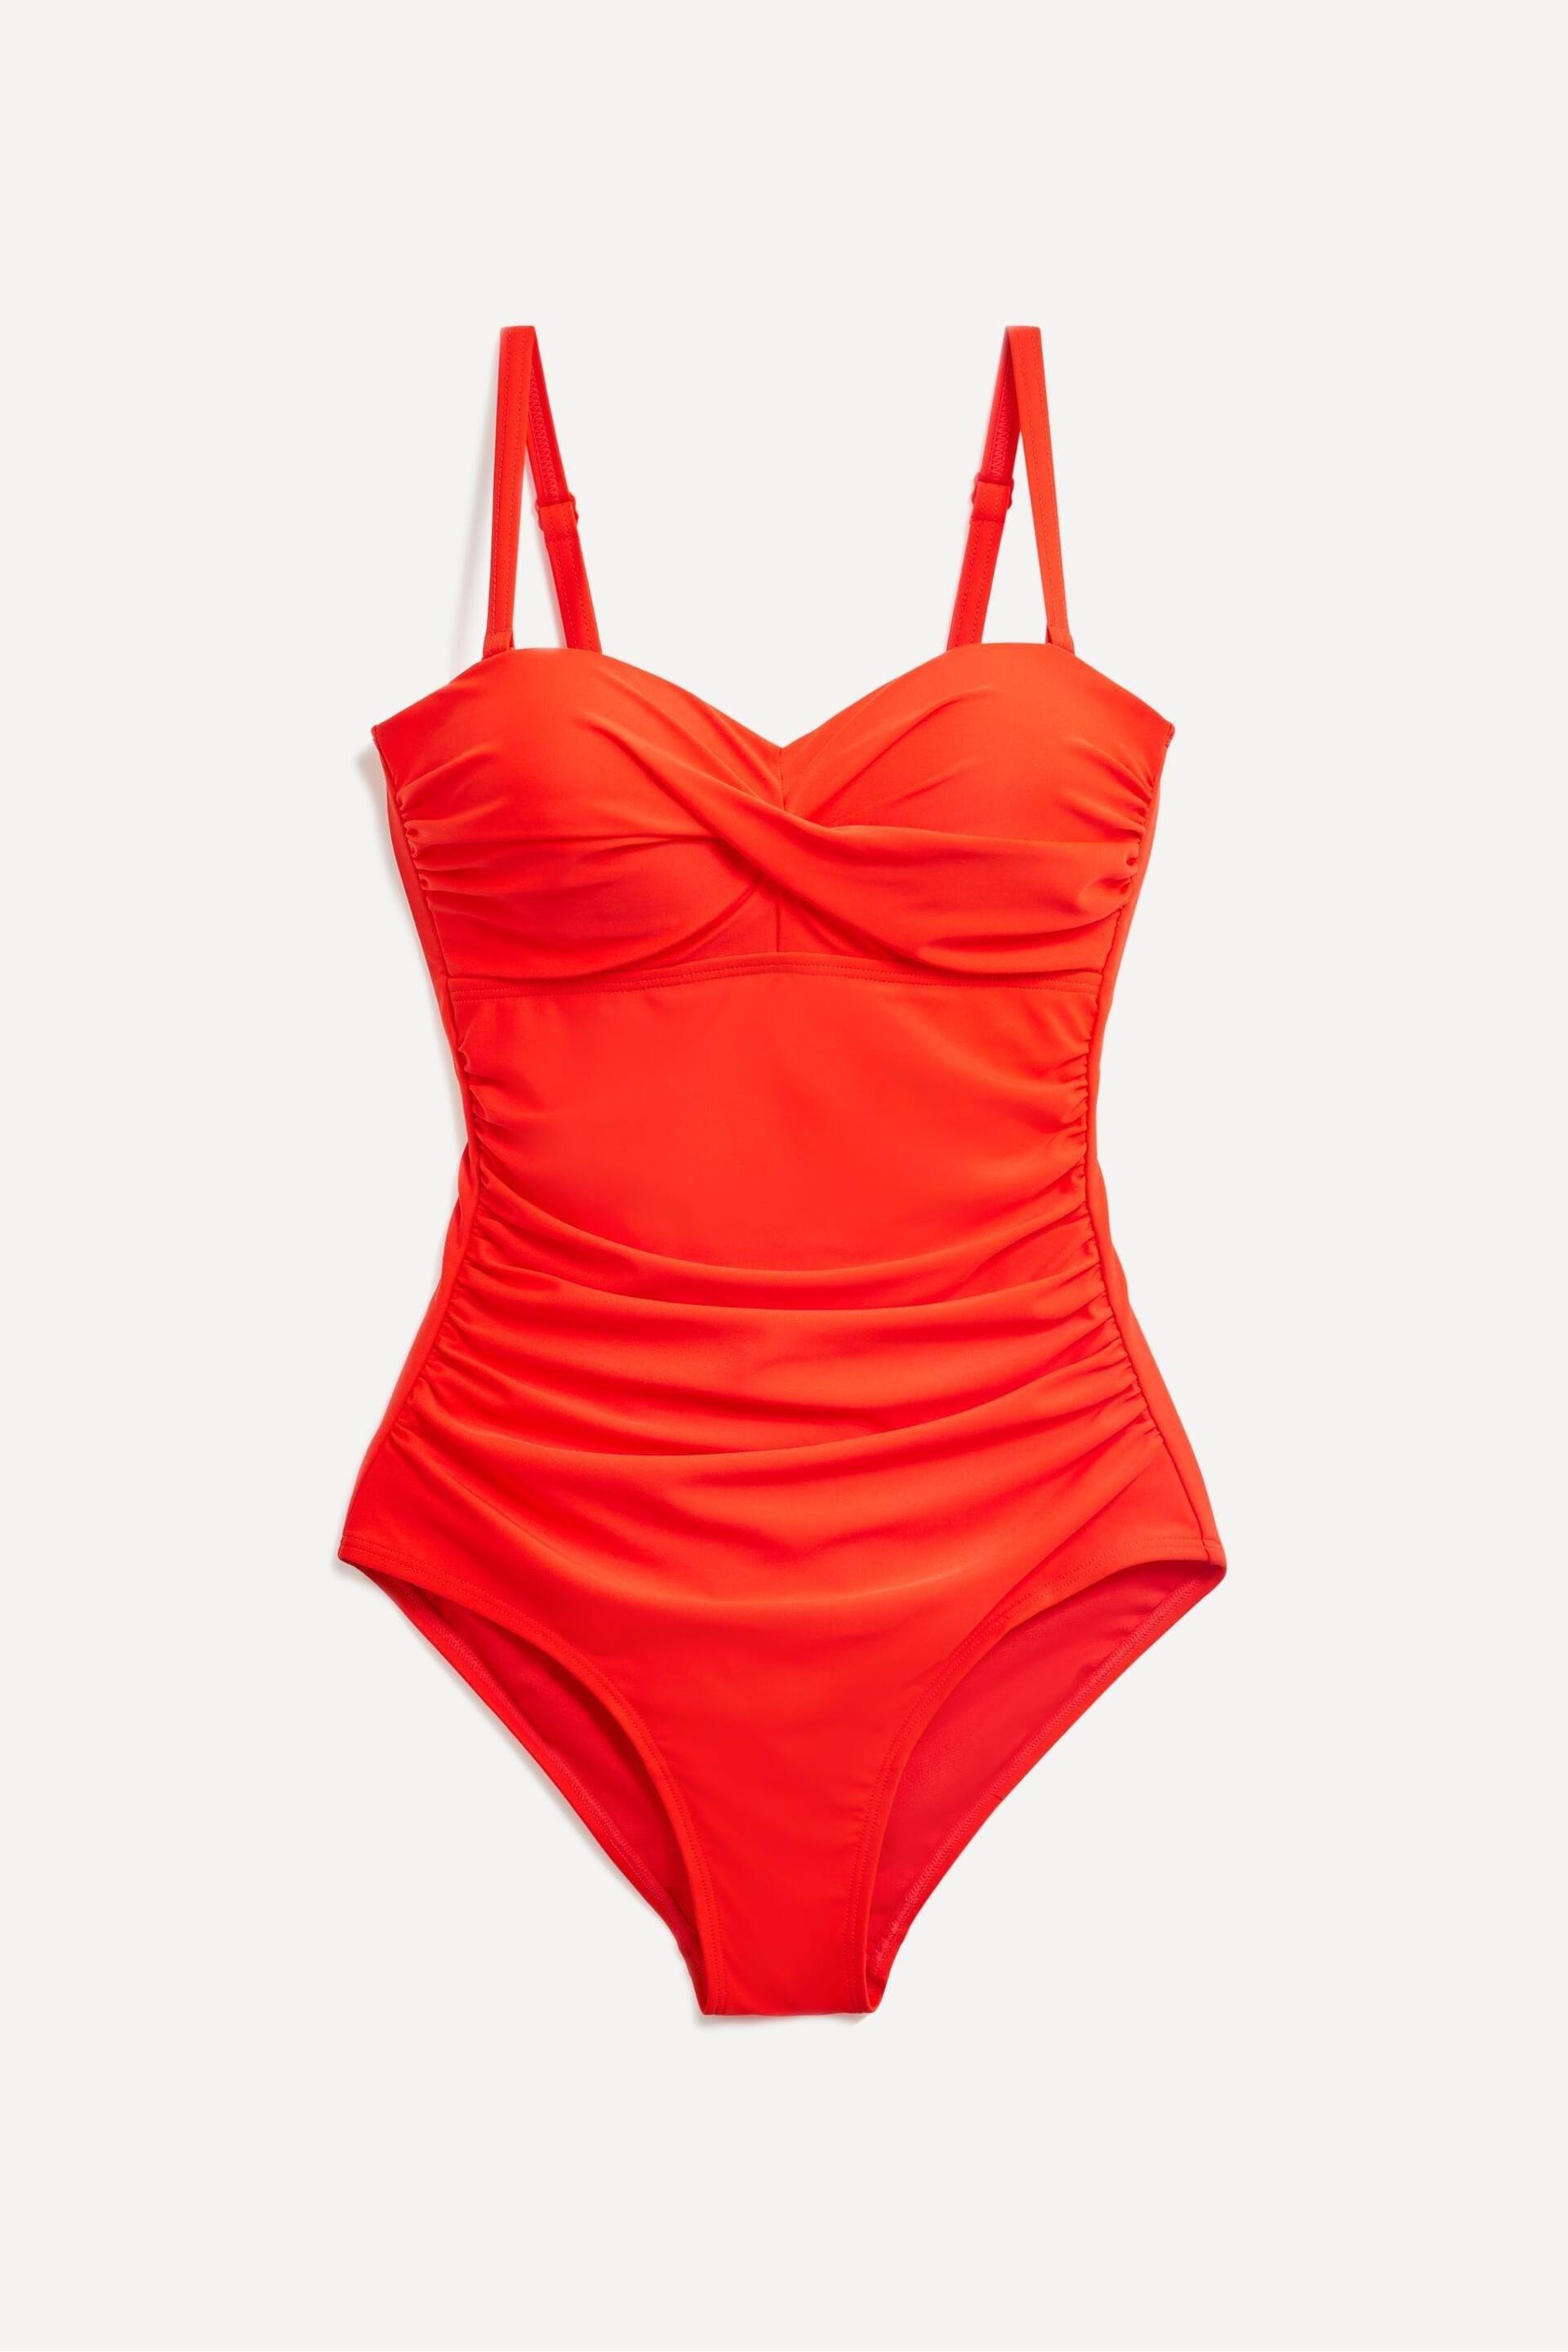 Linzi Orange Capri Bandeau Soft Cupped Tummy Control Swimsuit With Detachable Straps - Image 6 of 9